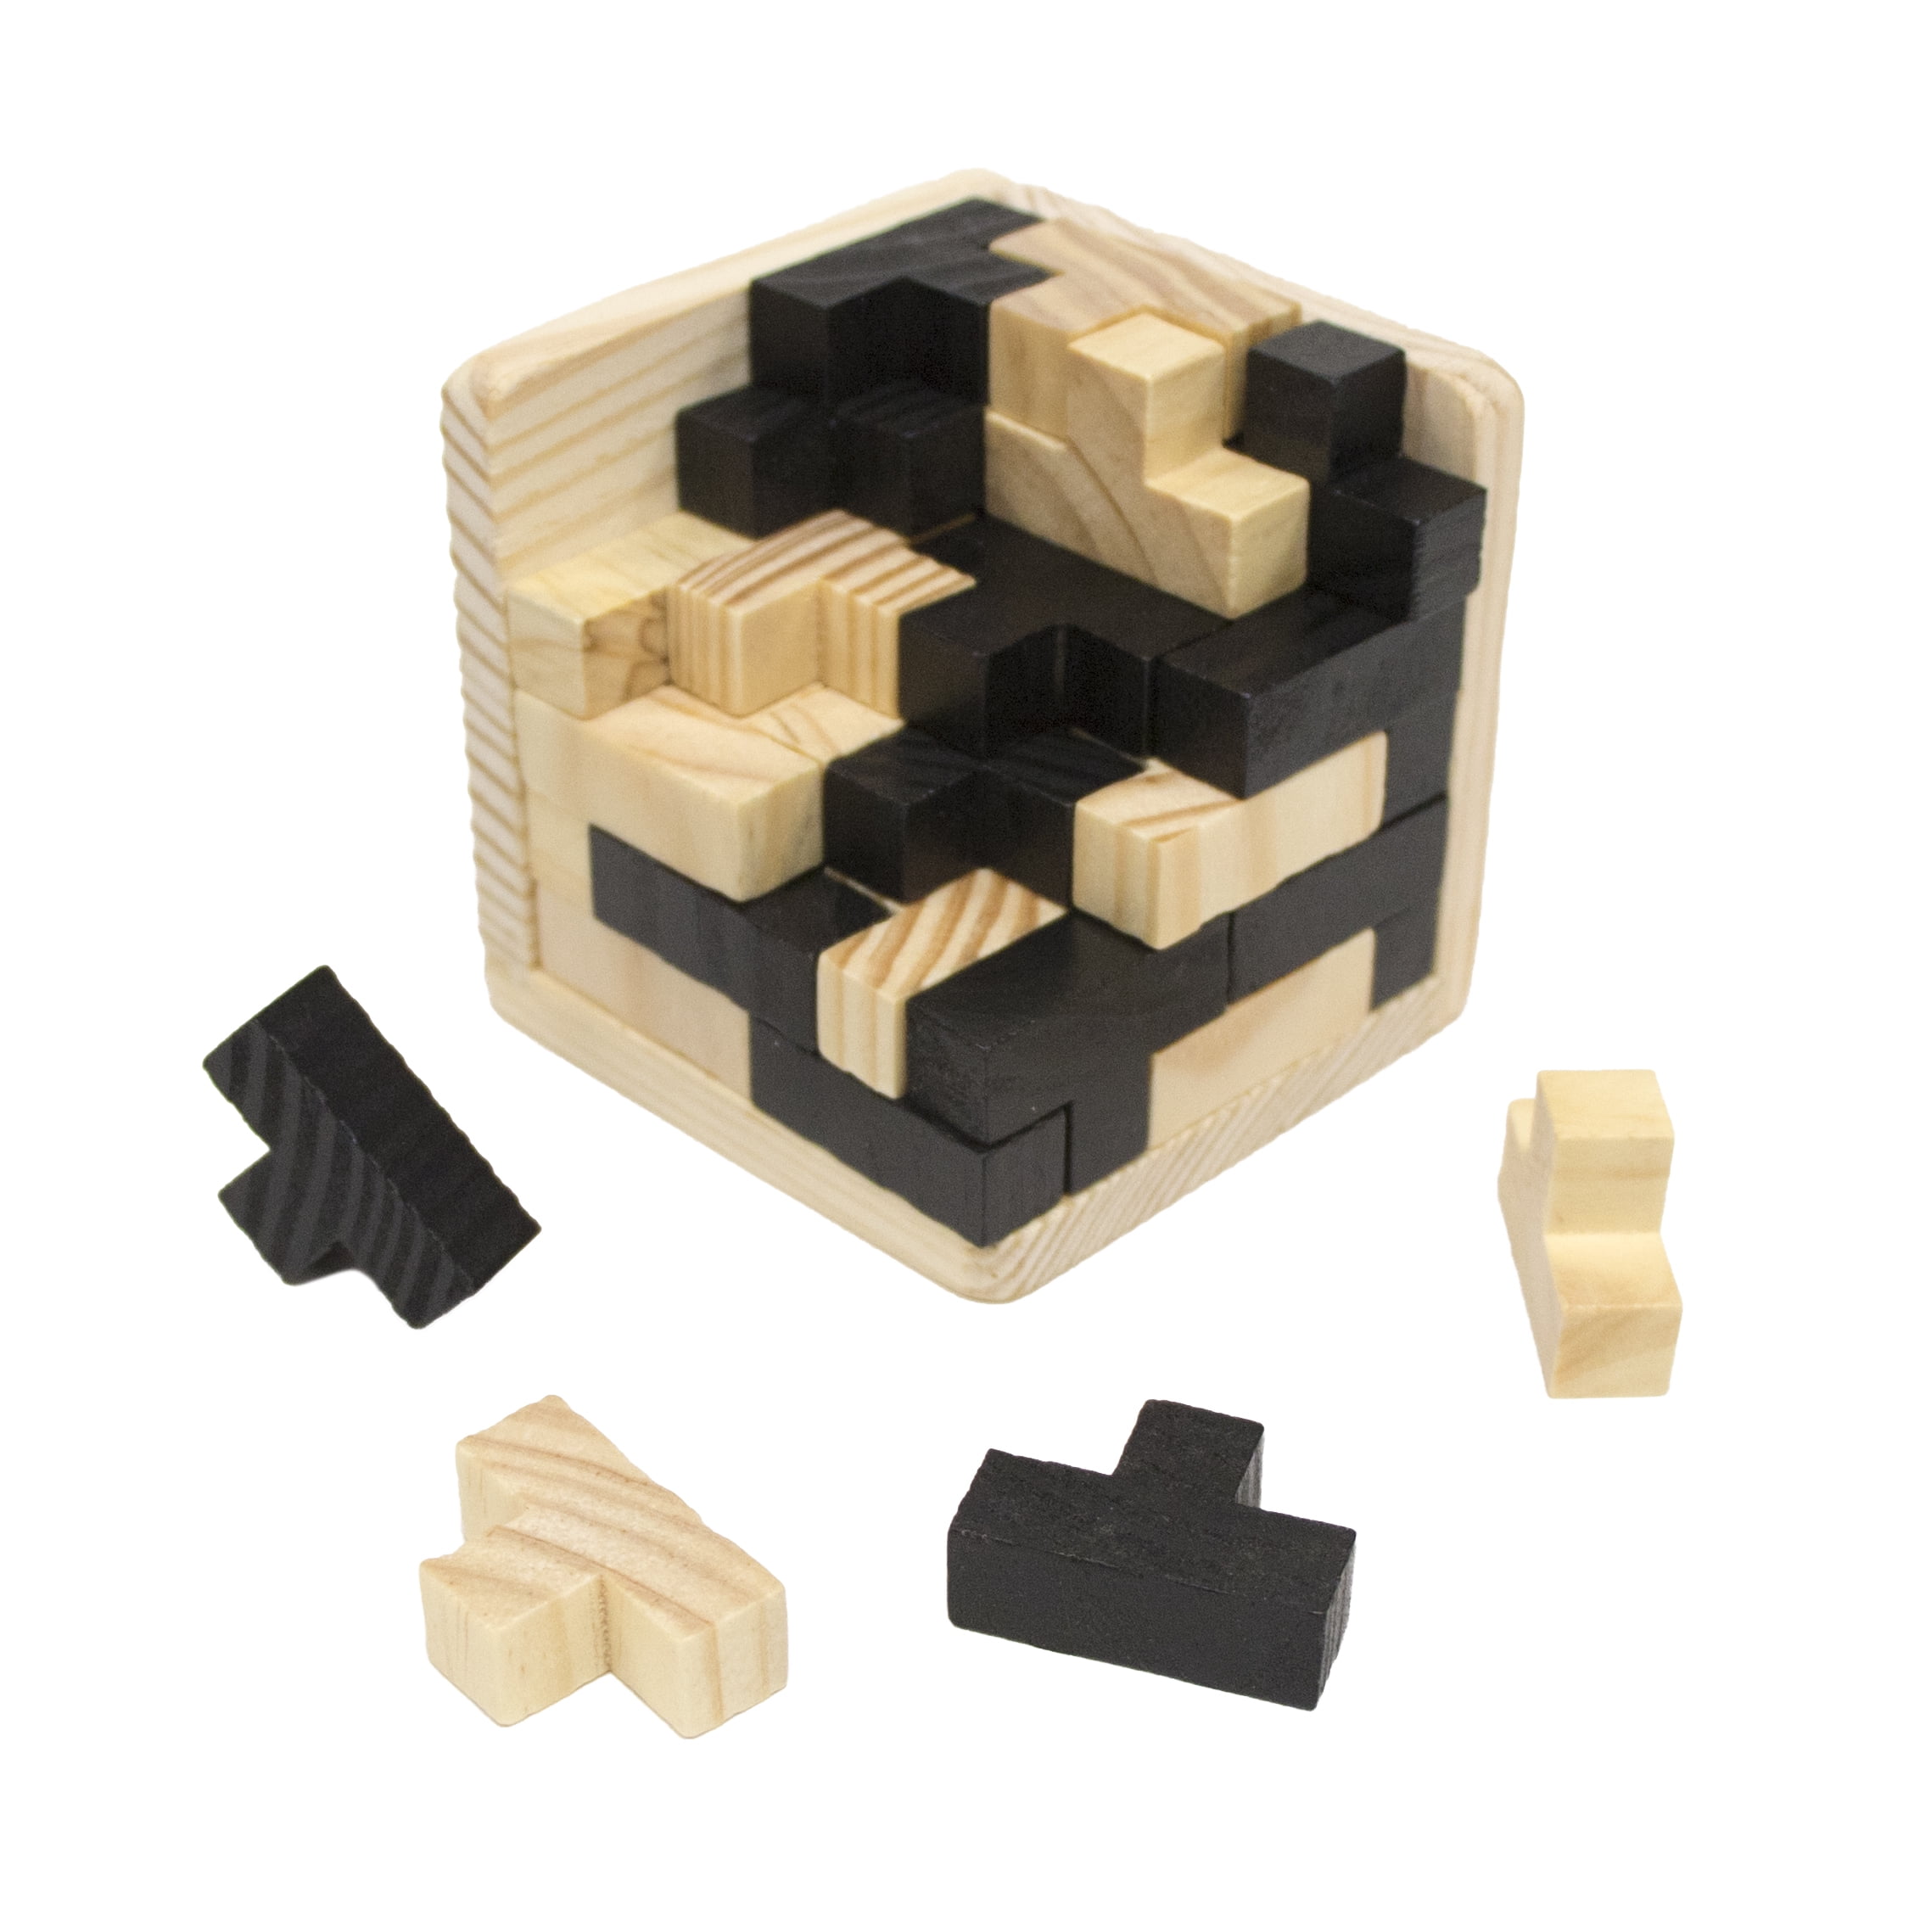 3D Wooden Cube Puzzle Building Blocks 3D Brain Teaser Puzzle Toy Gift 